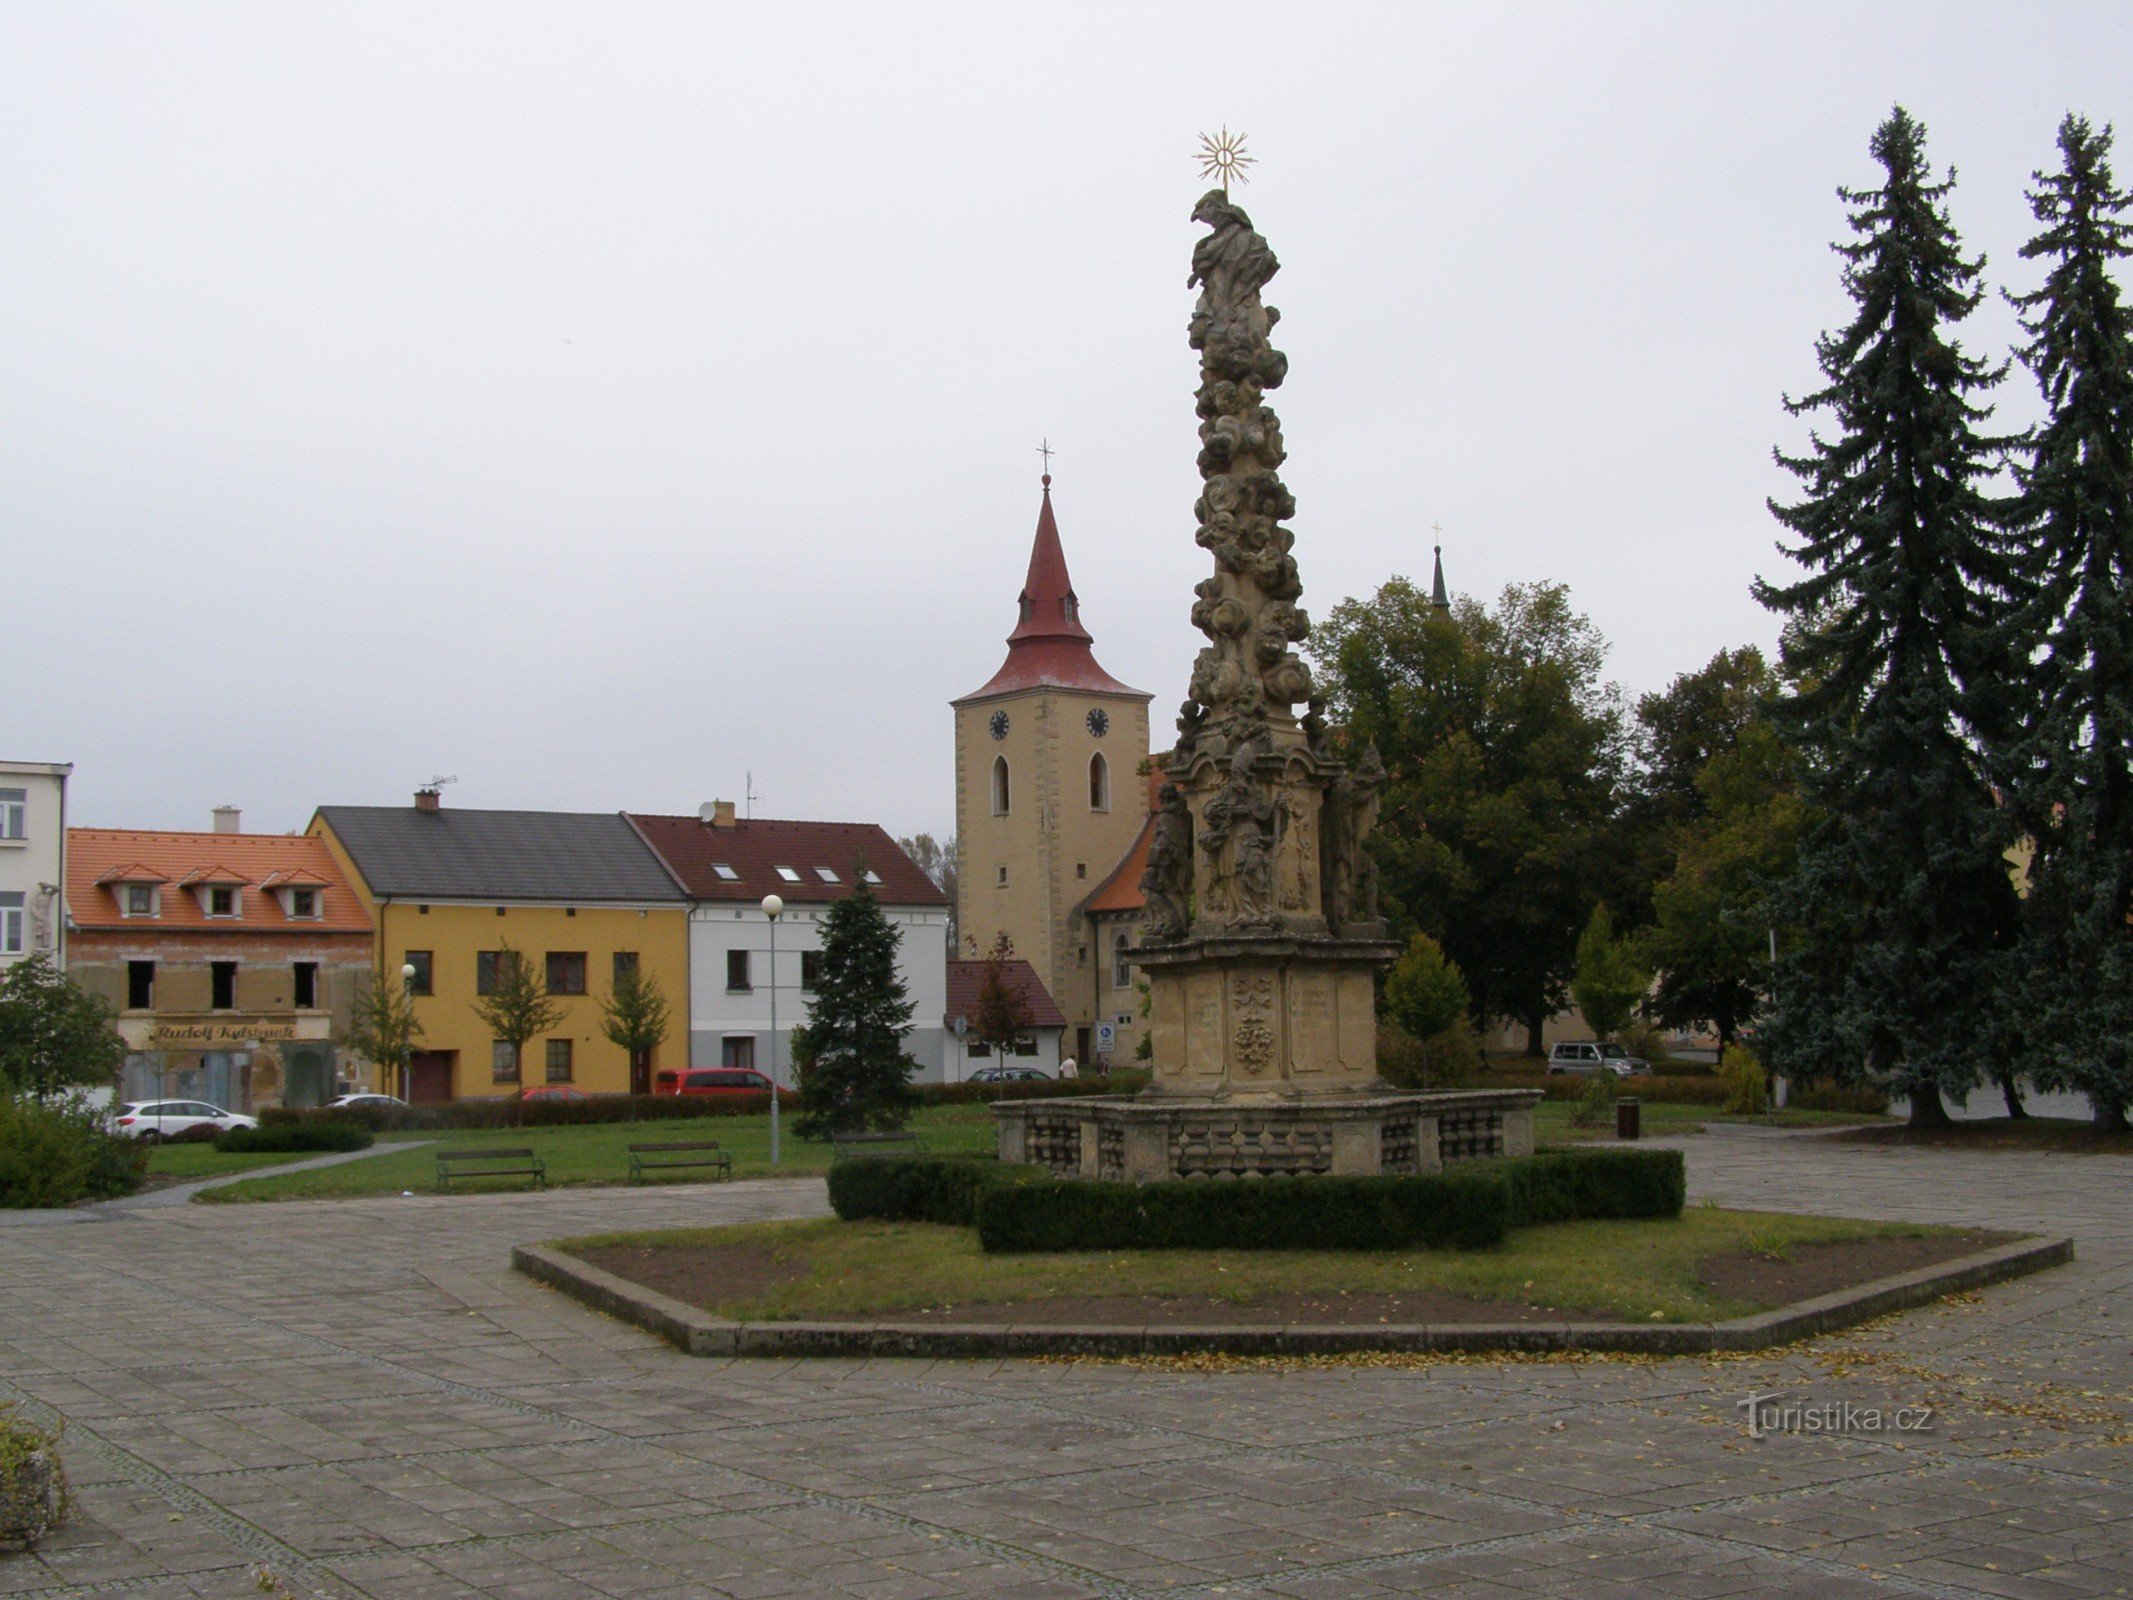 Bakov nad Jizerou の広場